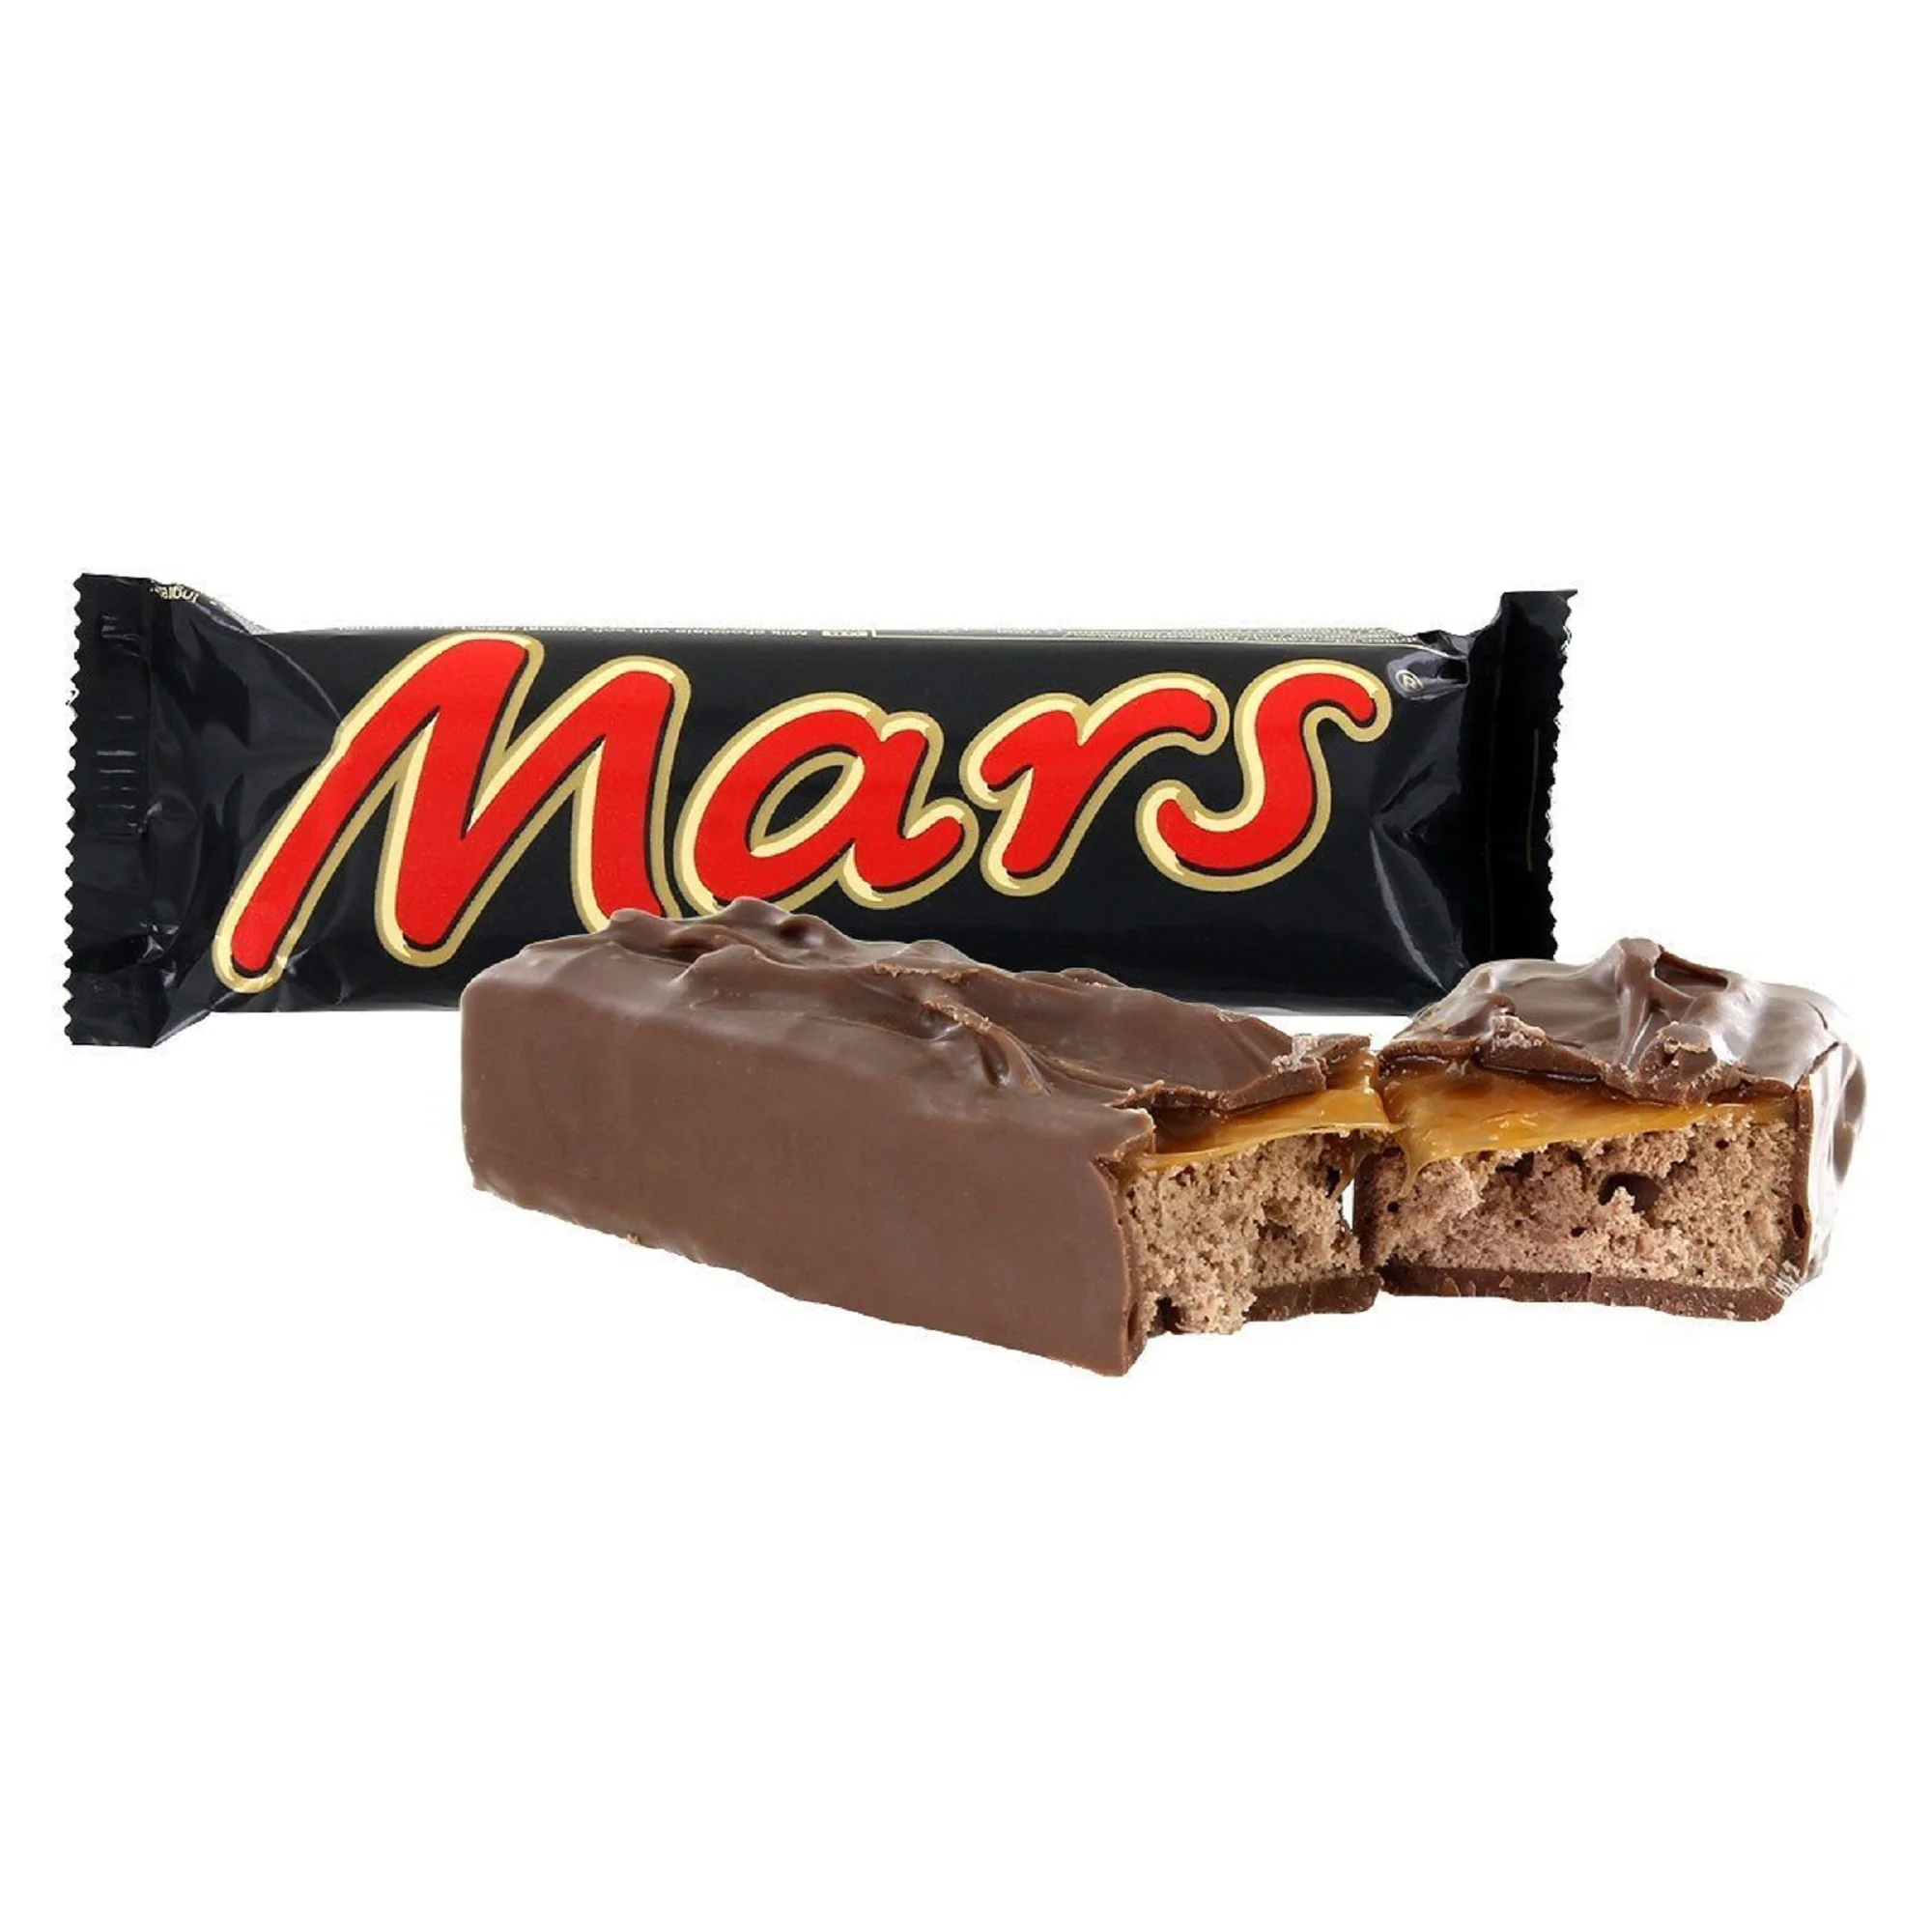 Mars Galaxy Smooth Caramel Chocolate Buy Mars Chocolate Bars Snickers Mars Twix Bounty Chocolate Masterfoods Galaxy Chocolate Box Product On Alibaba Com